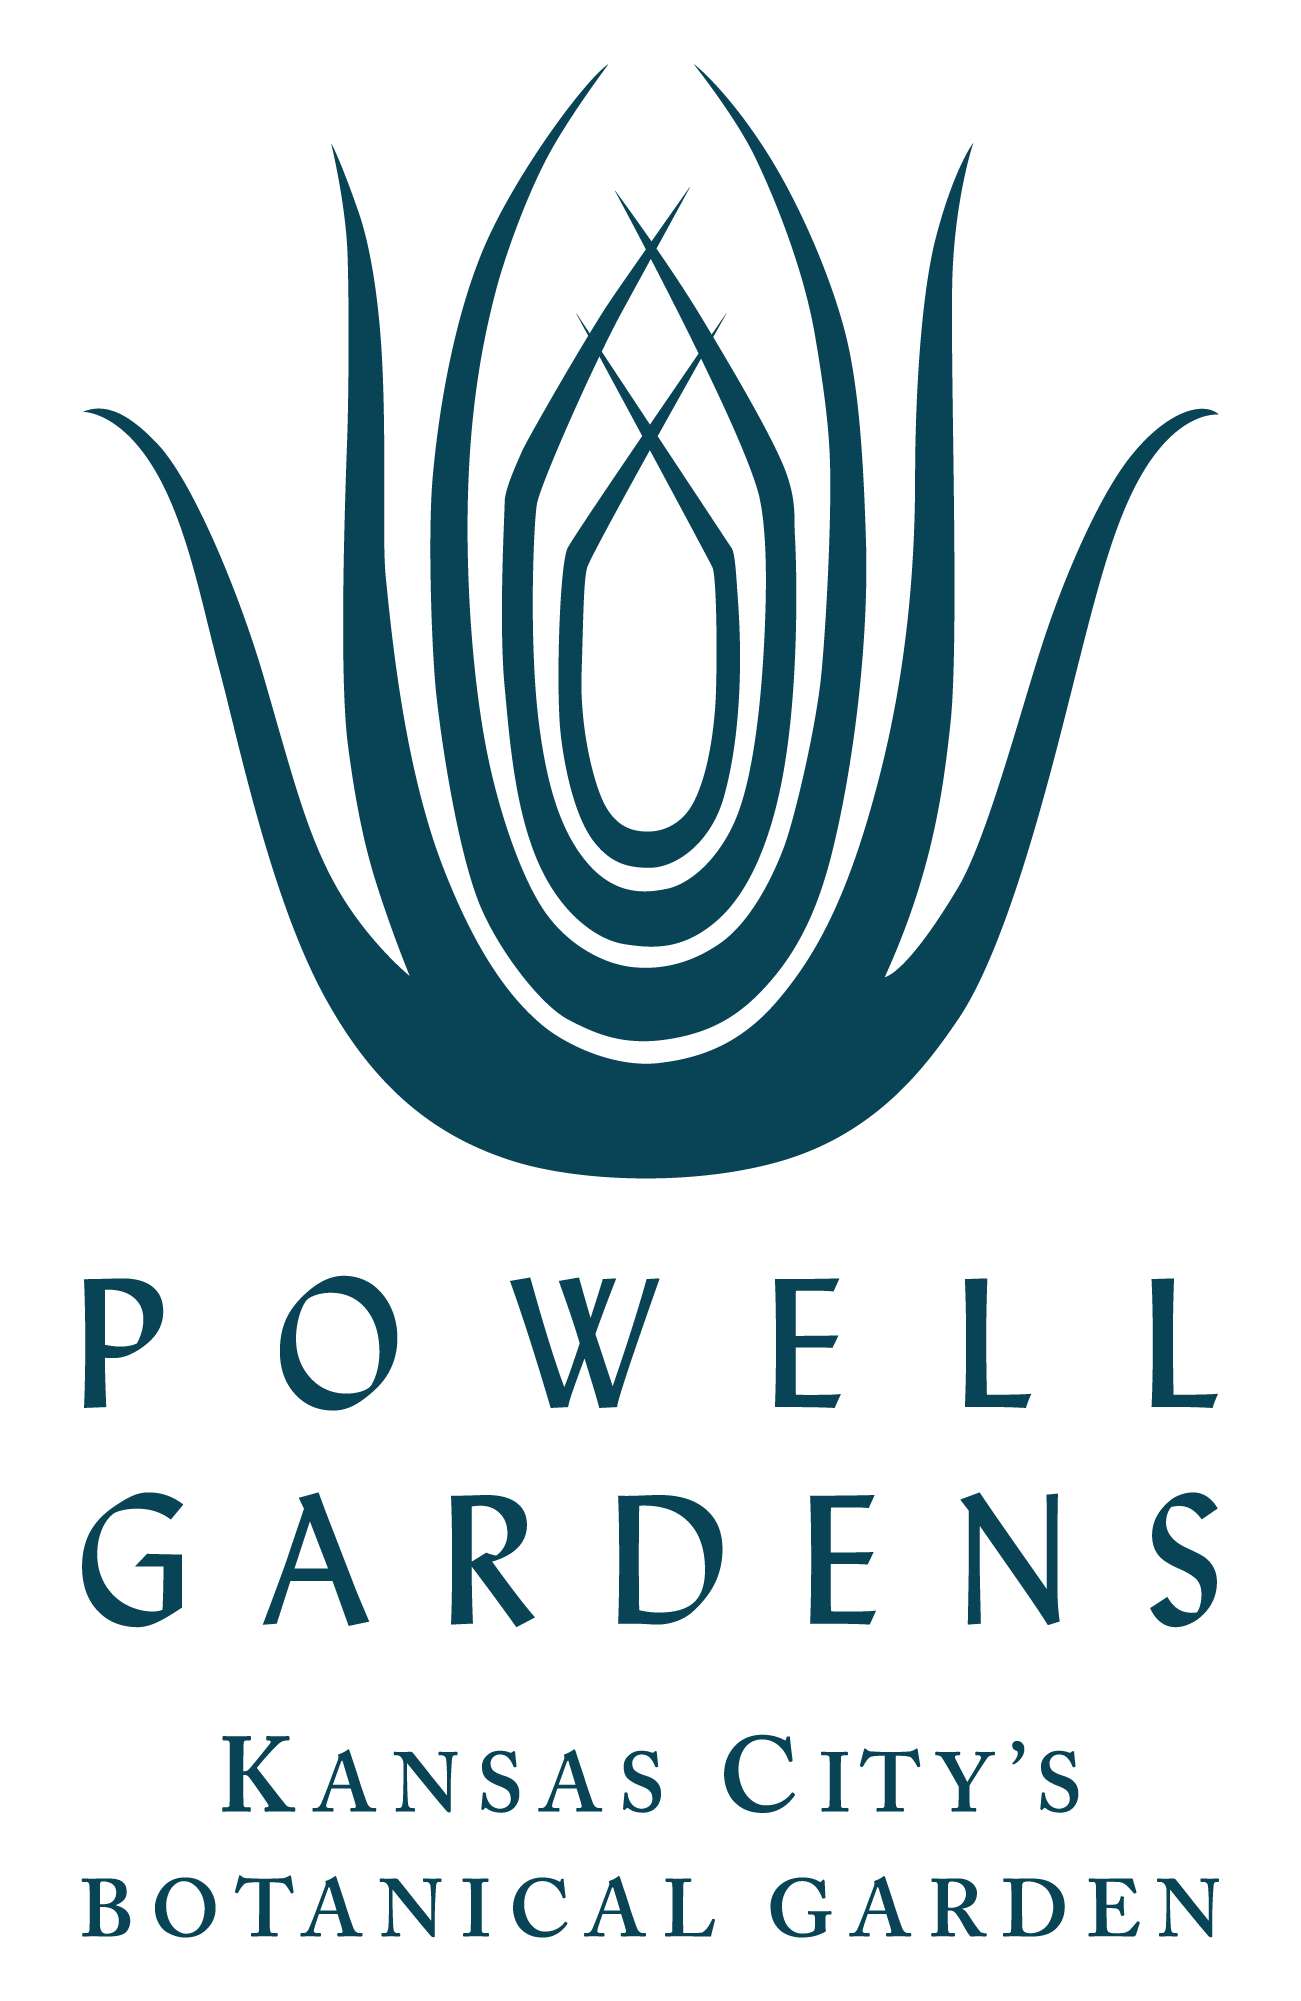 Powell Gardens logo